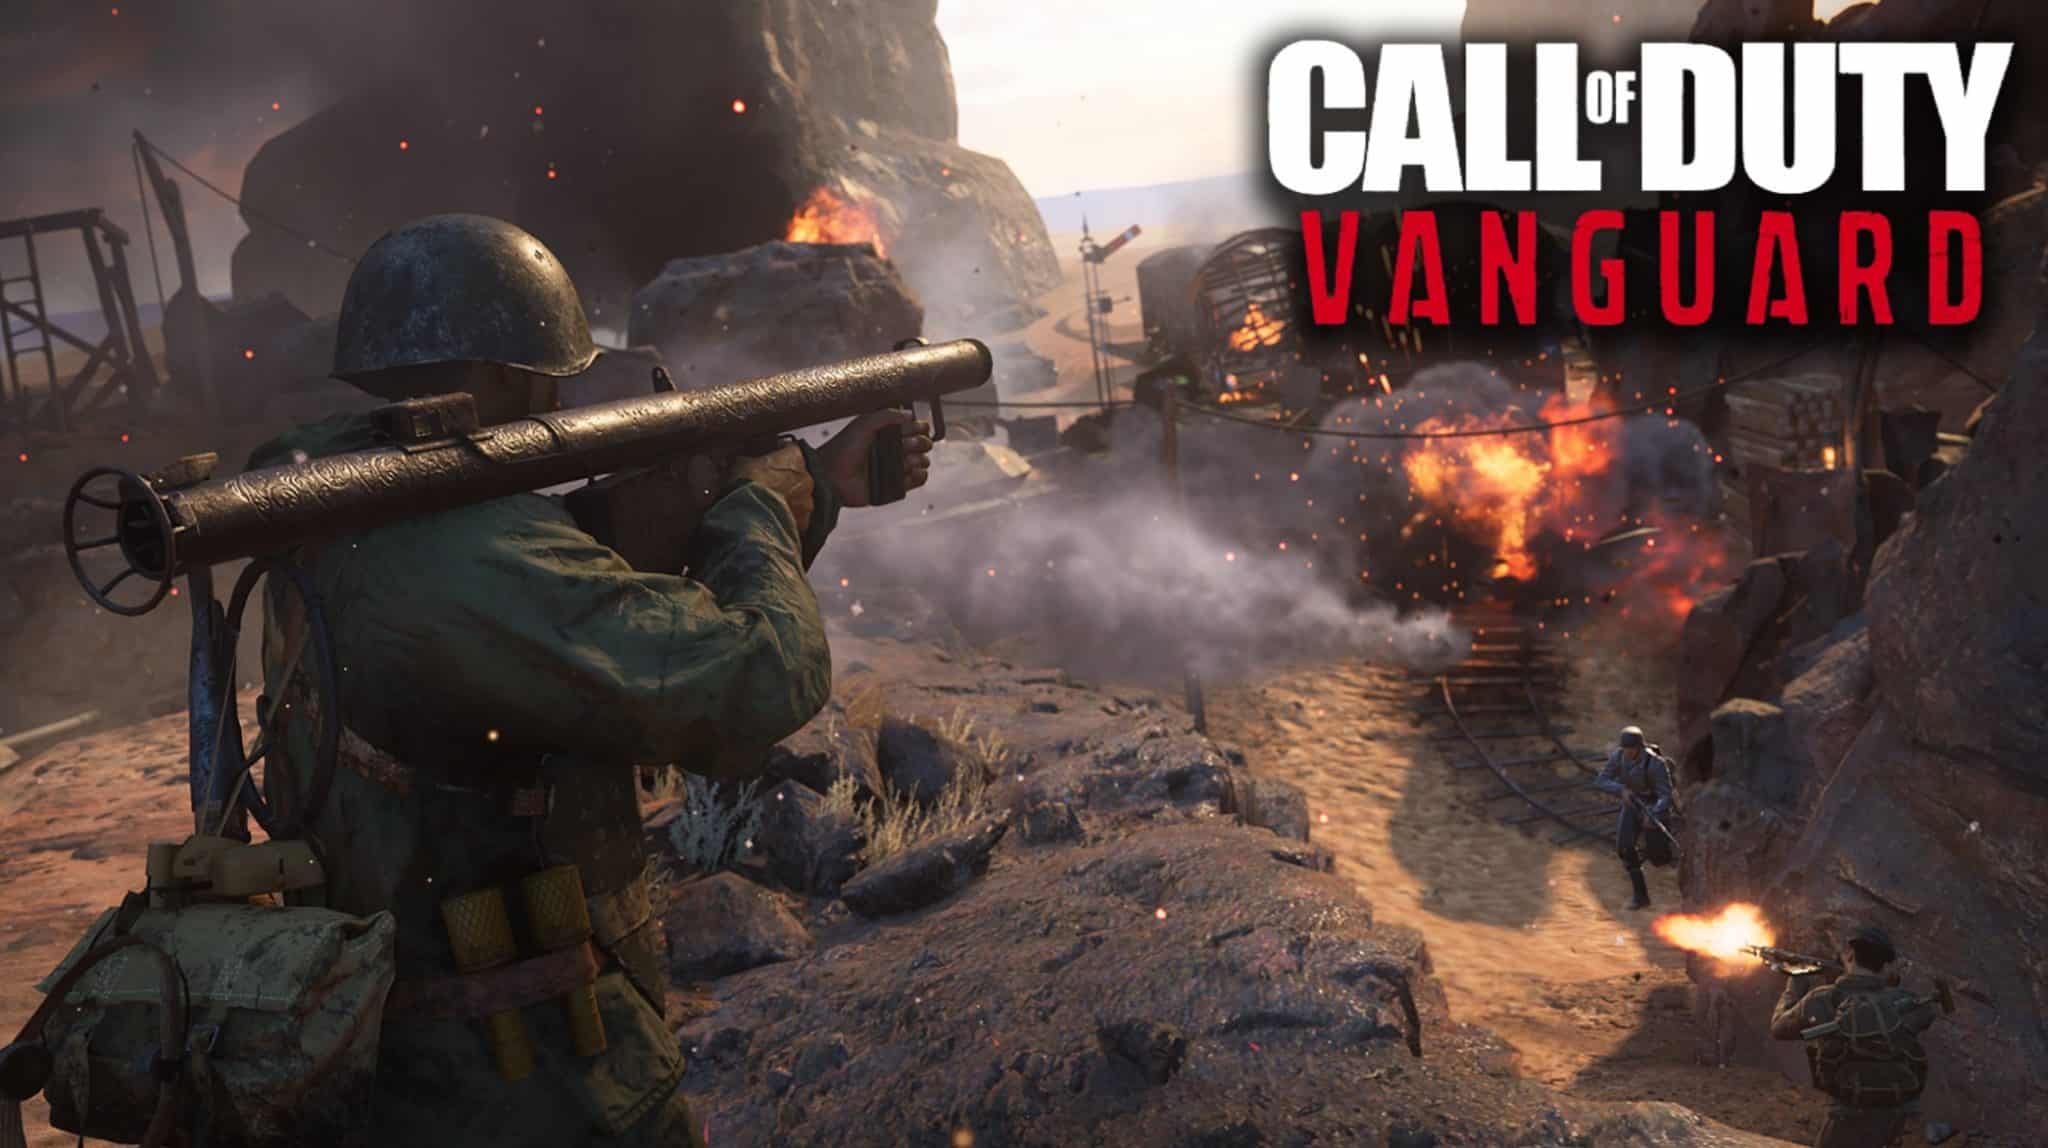 Call of Duty Vanguard-Bilder durchgesickert | Leadergamer